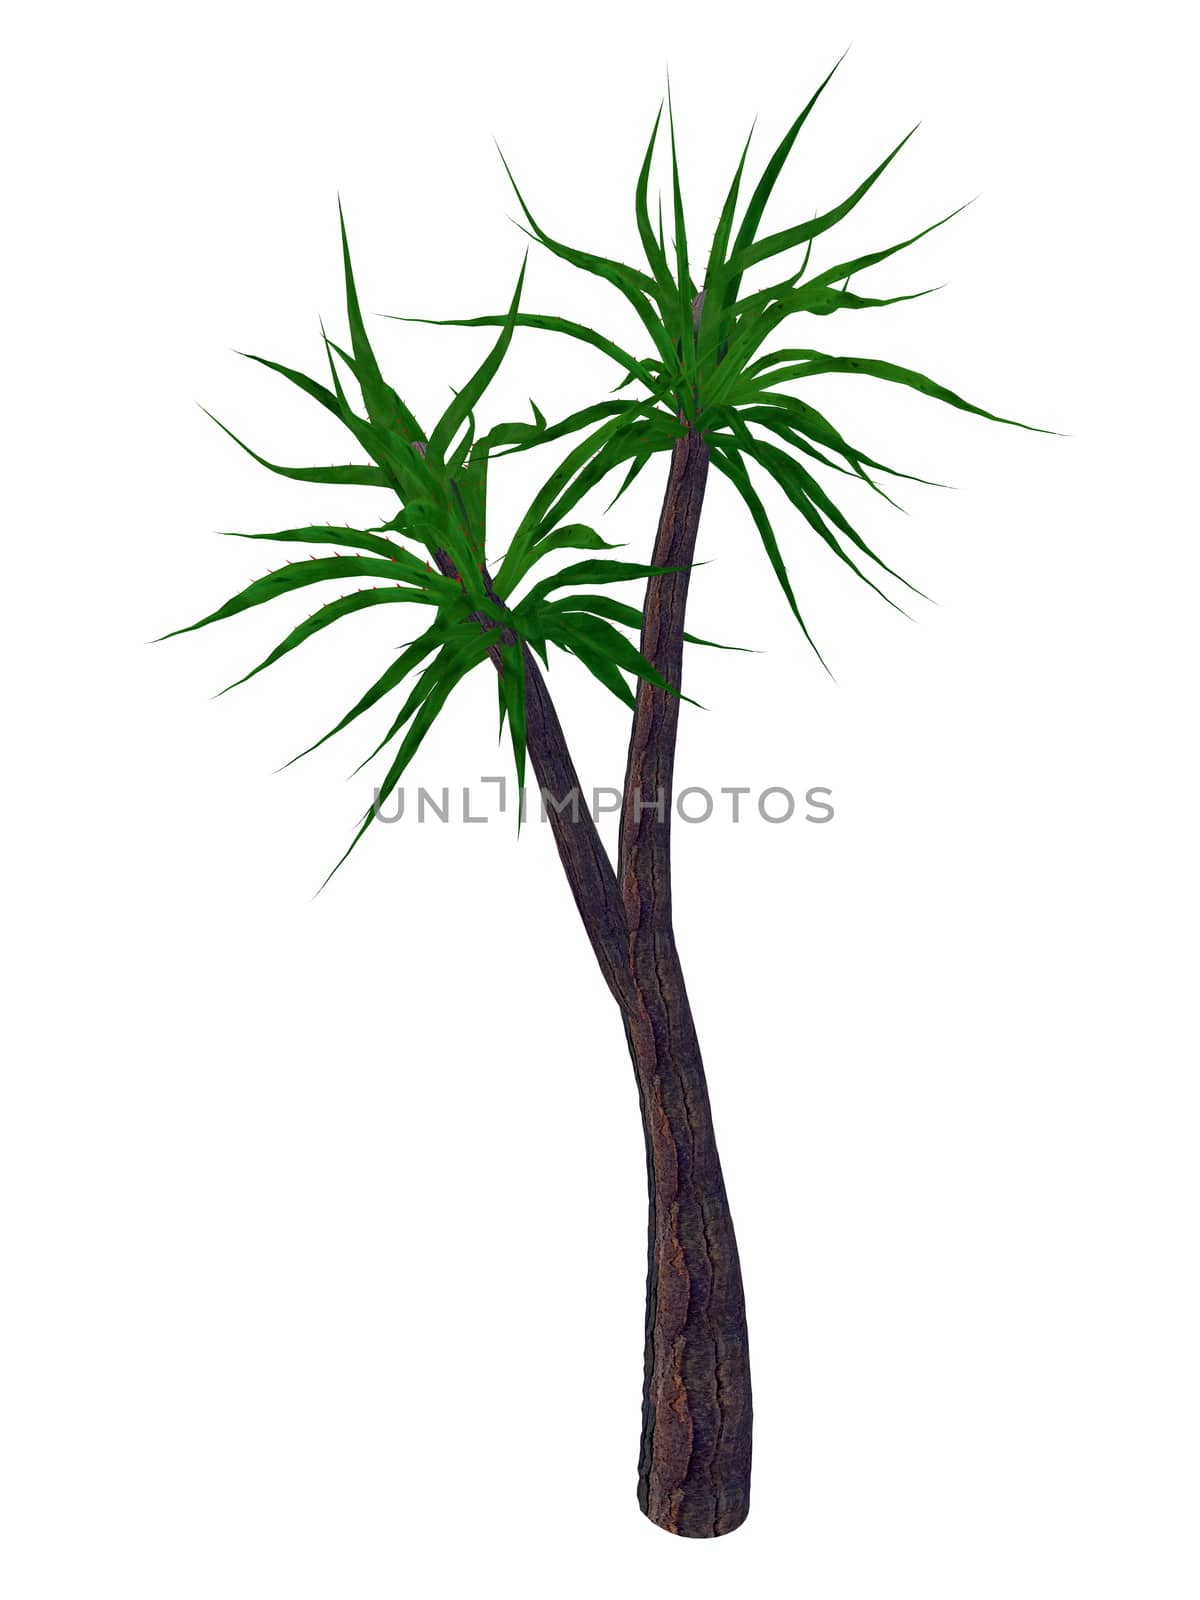 Aloe barberae tree, a. bainesii - 3D render by Elenaphotos21